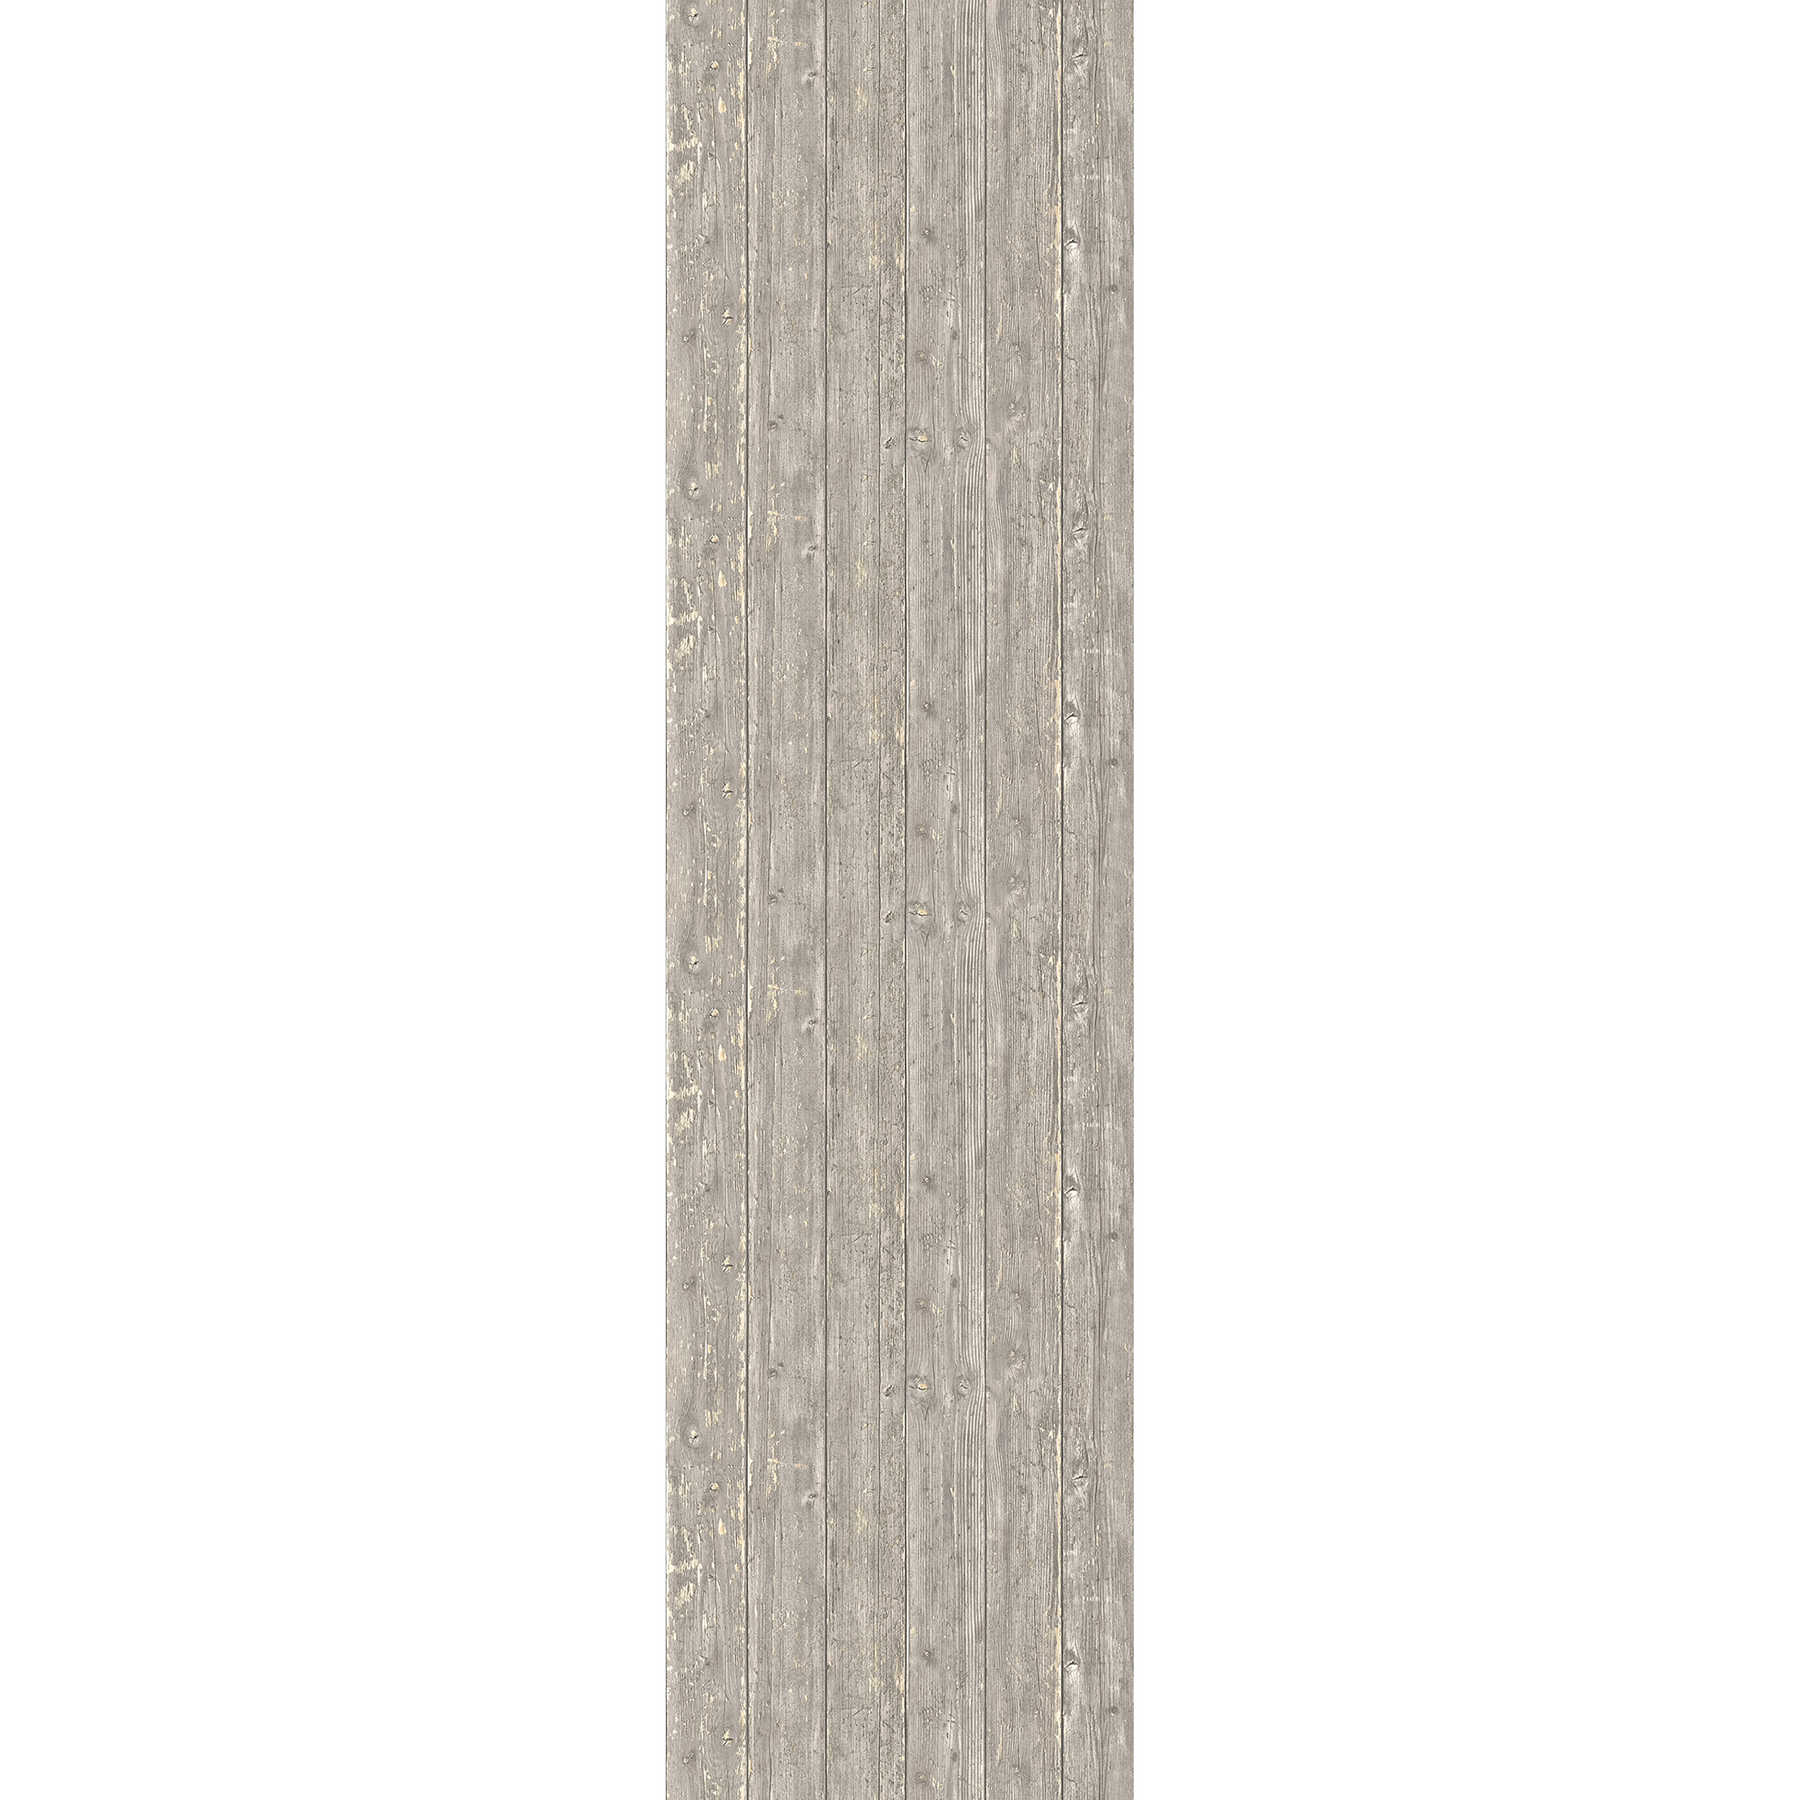         Wallpaper wood optics weathered used look - cream, grey
    